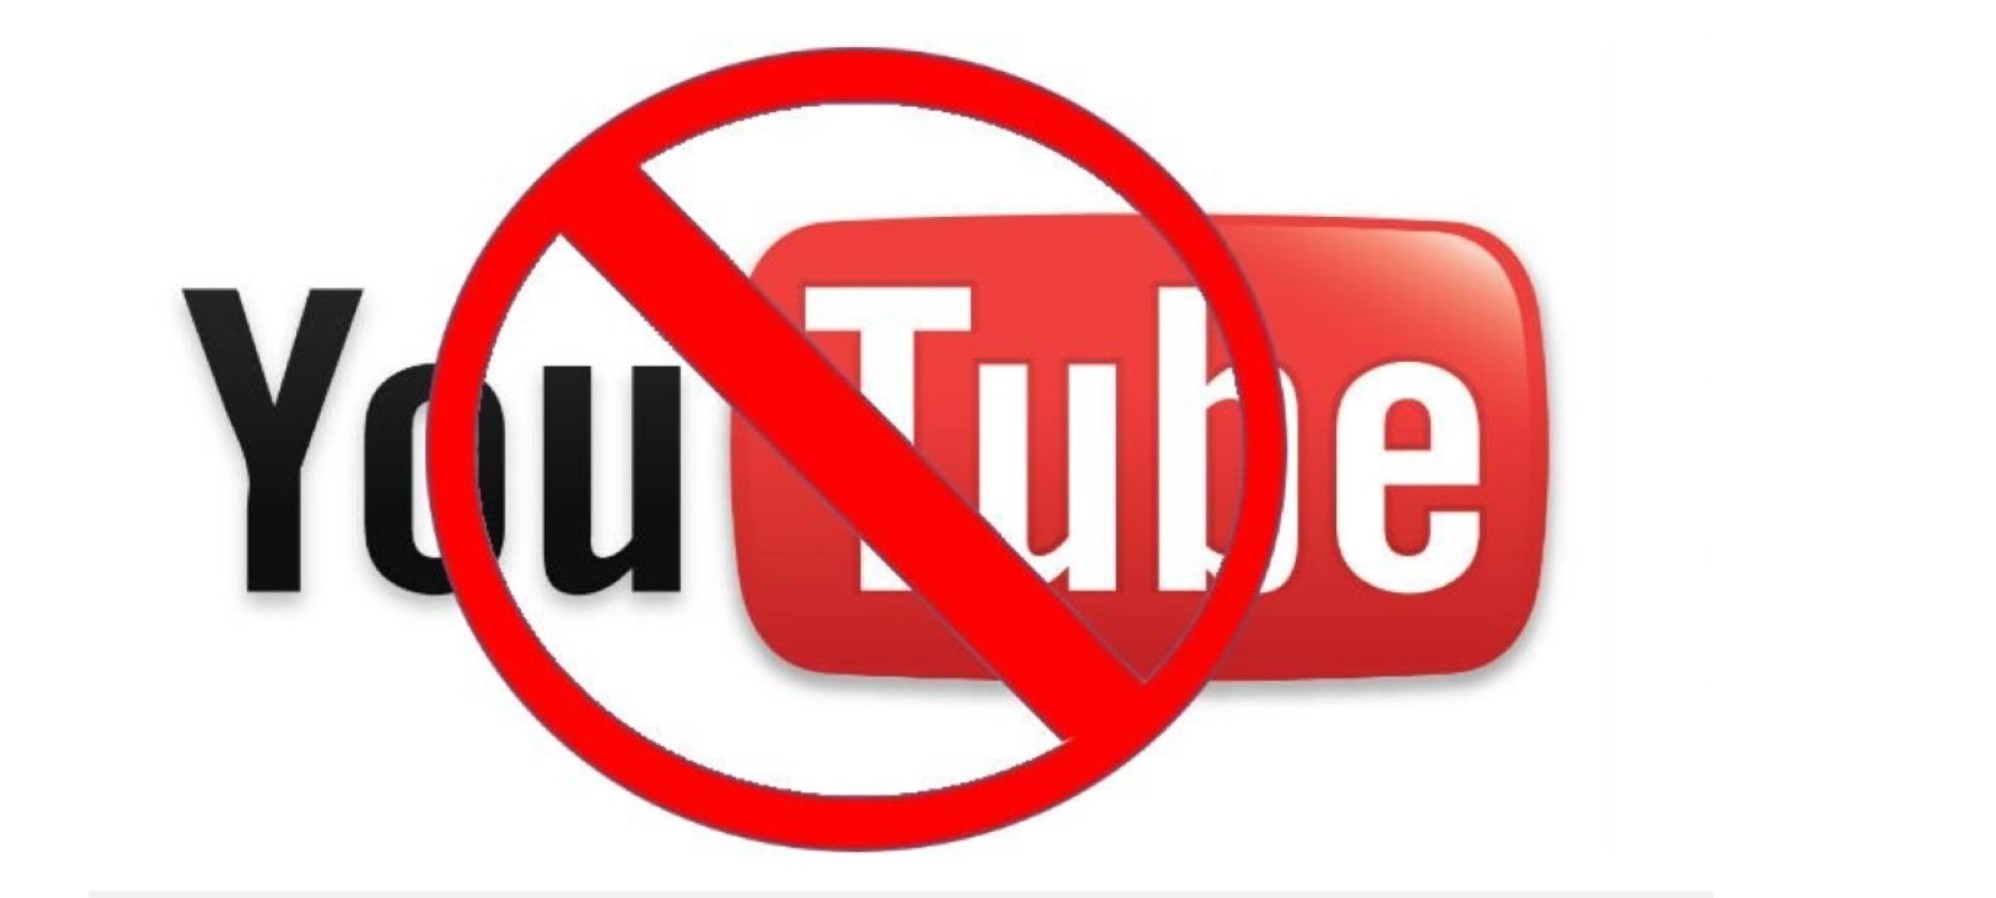 YouTube blocked Image from Slovo i Dilo